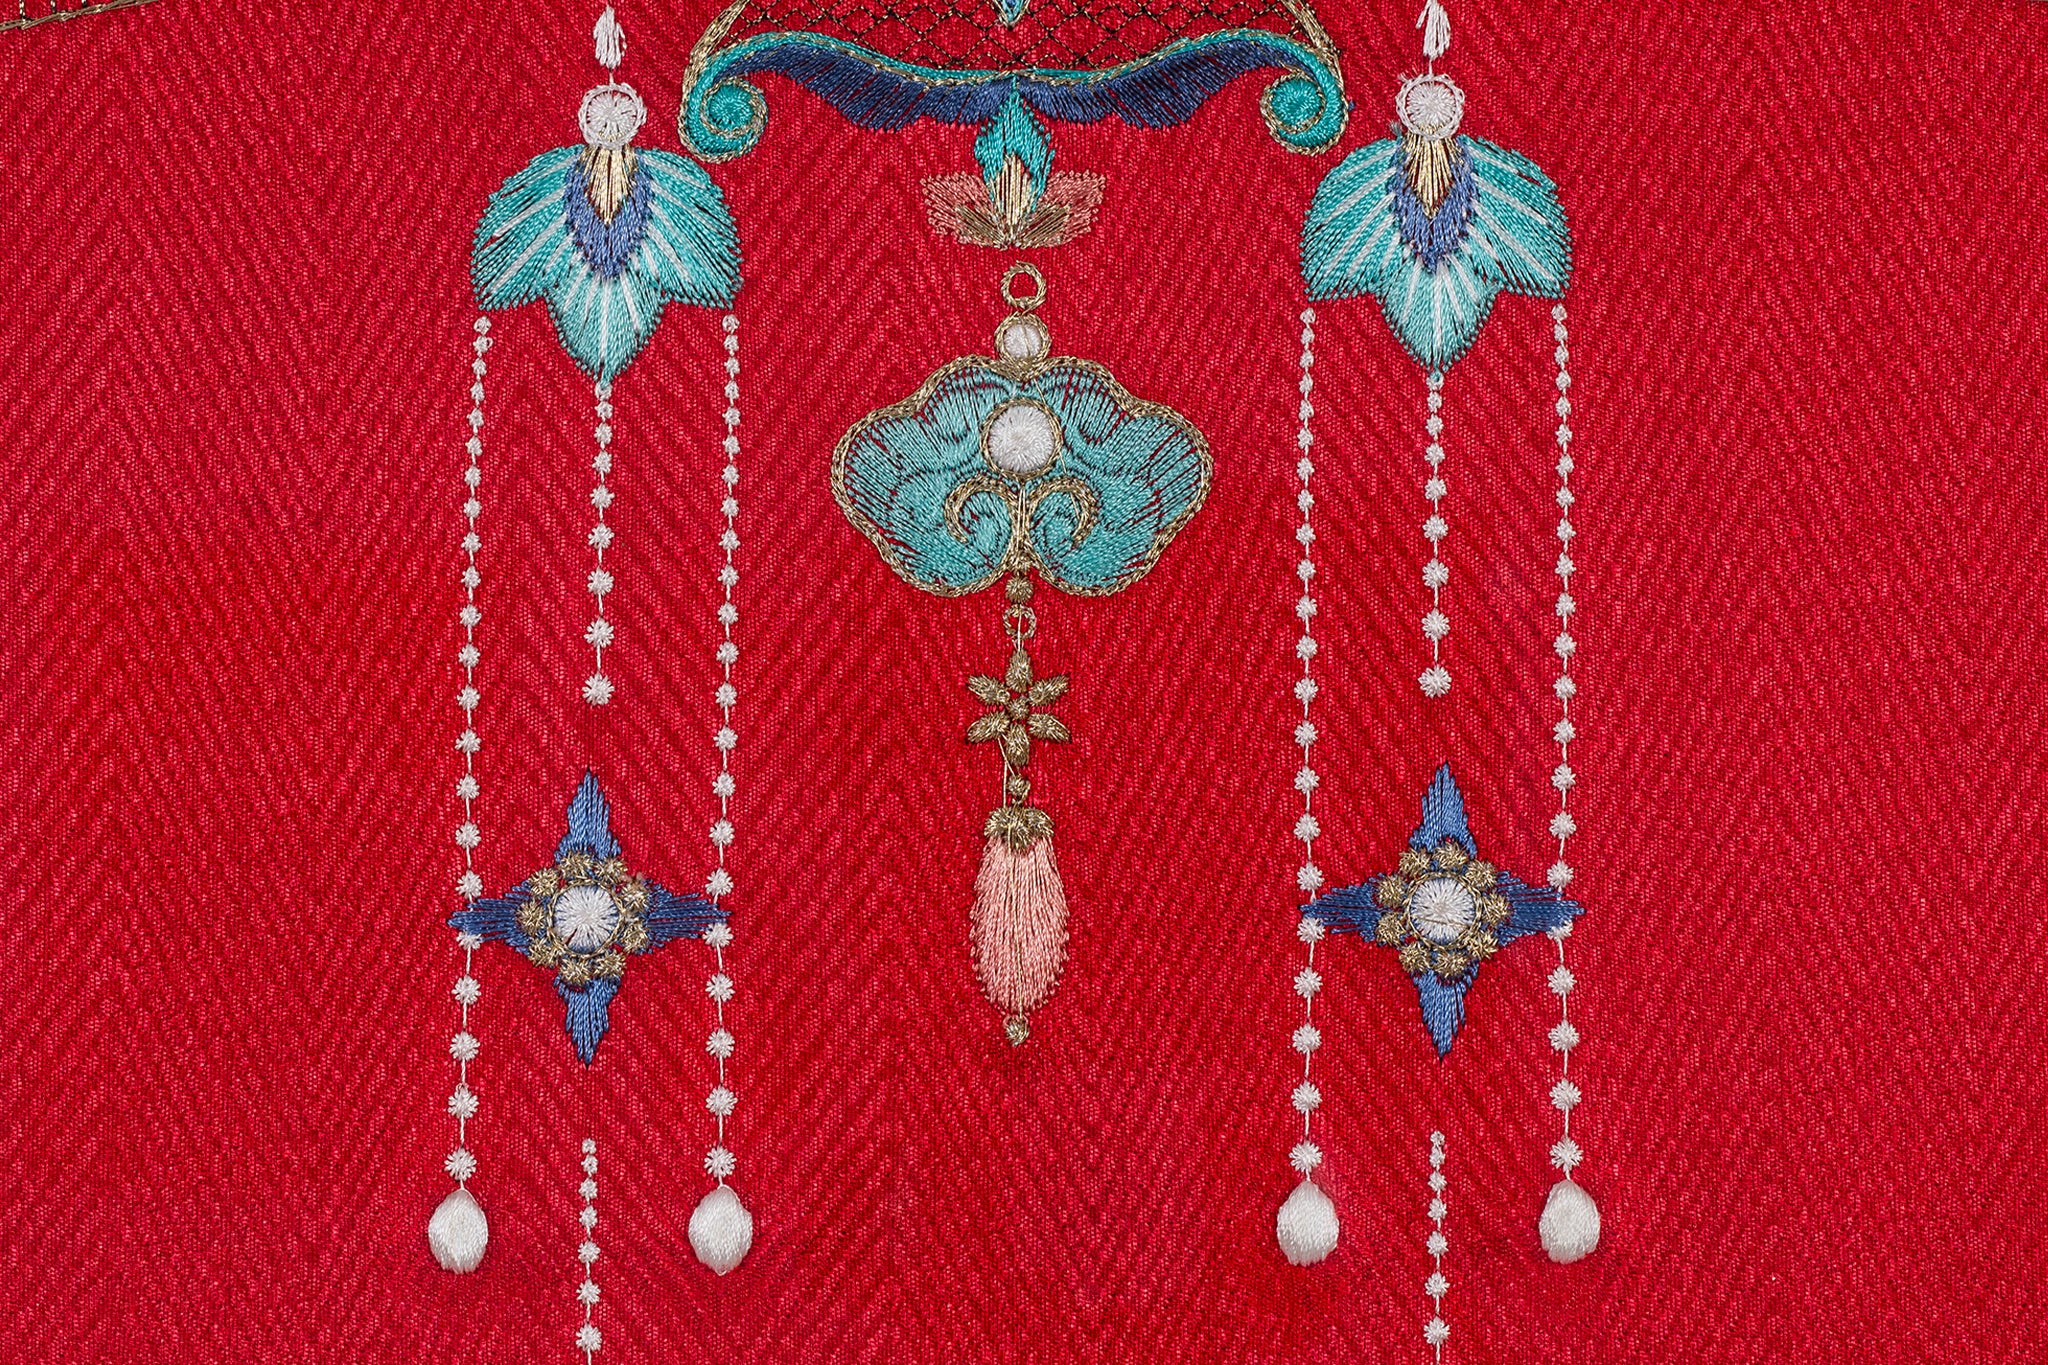 Bottom detail of an Oriental phoenix crown's Ruyi Pendant embroidery artwork.